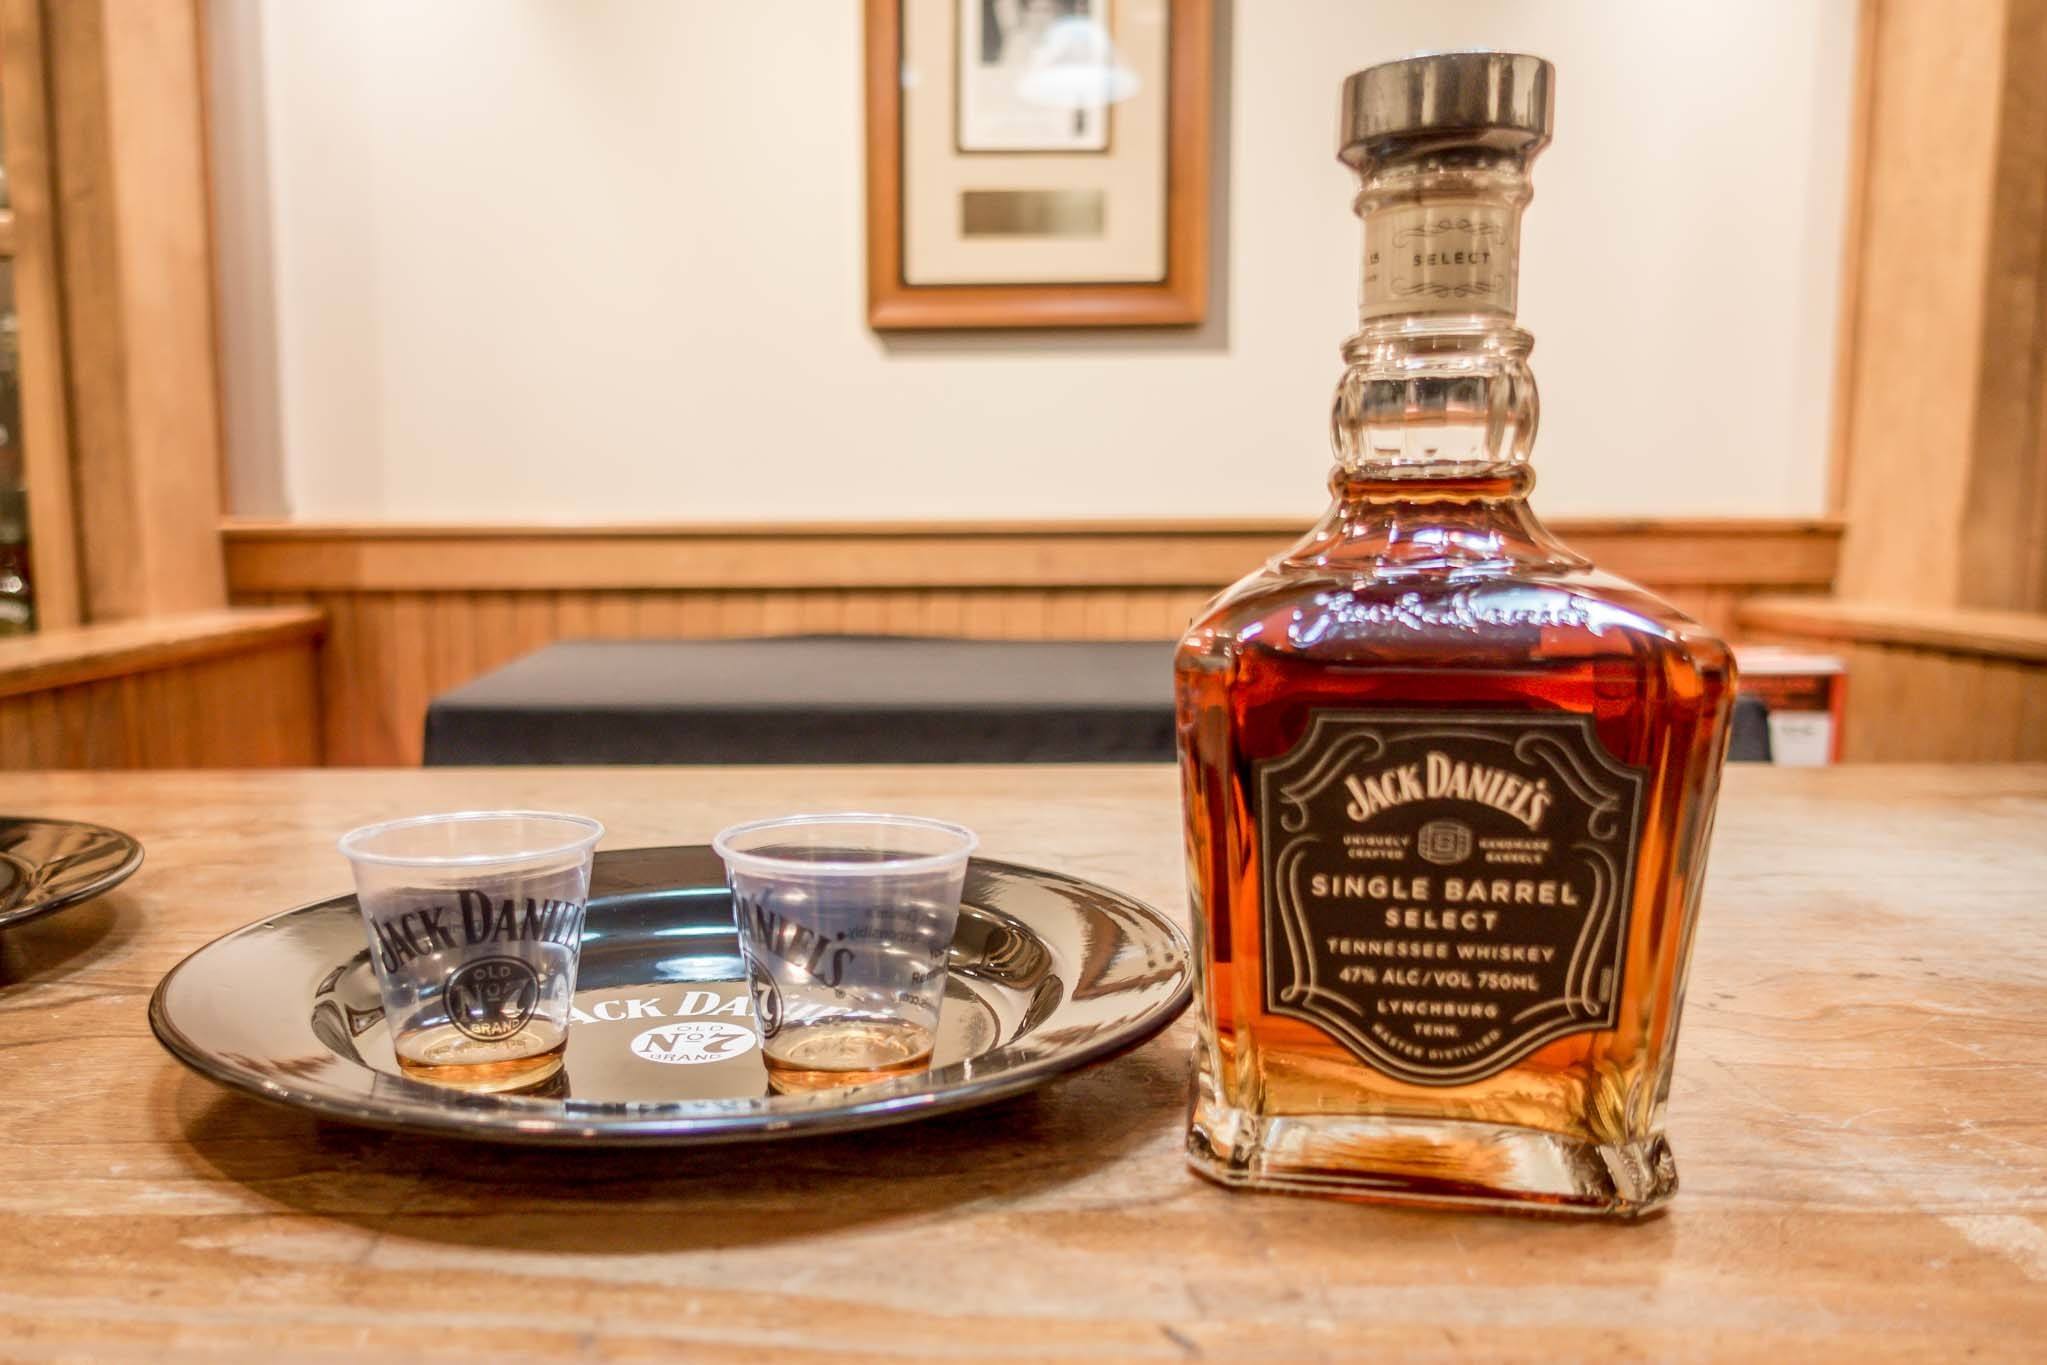 Jack Daniel's Single Barrel whiskey bottle and samples